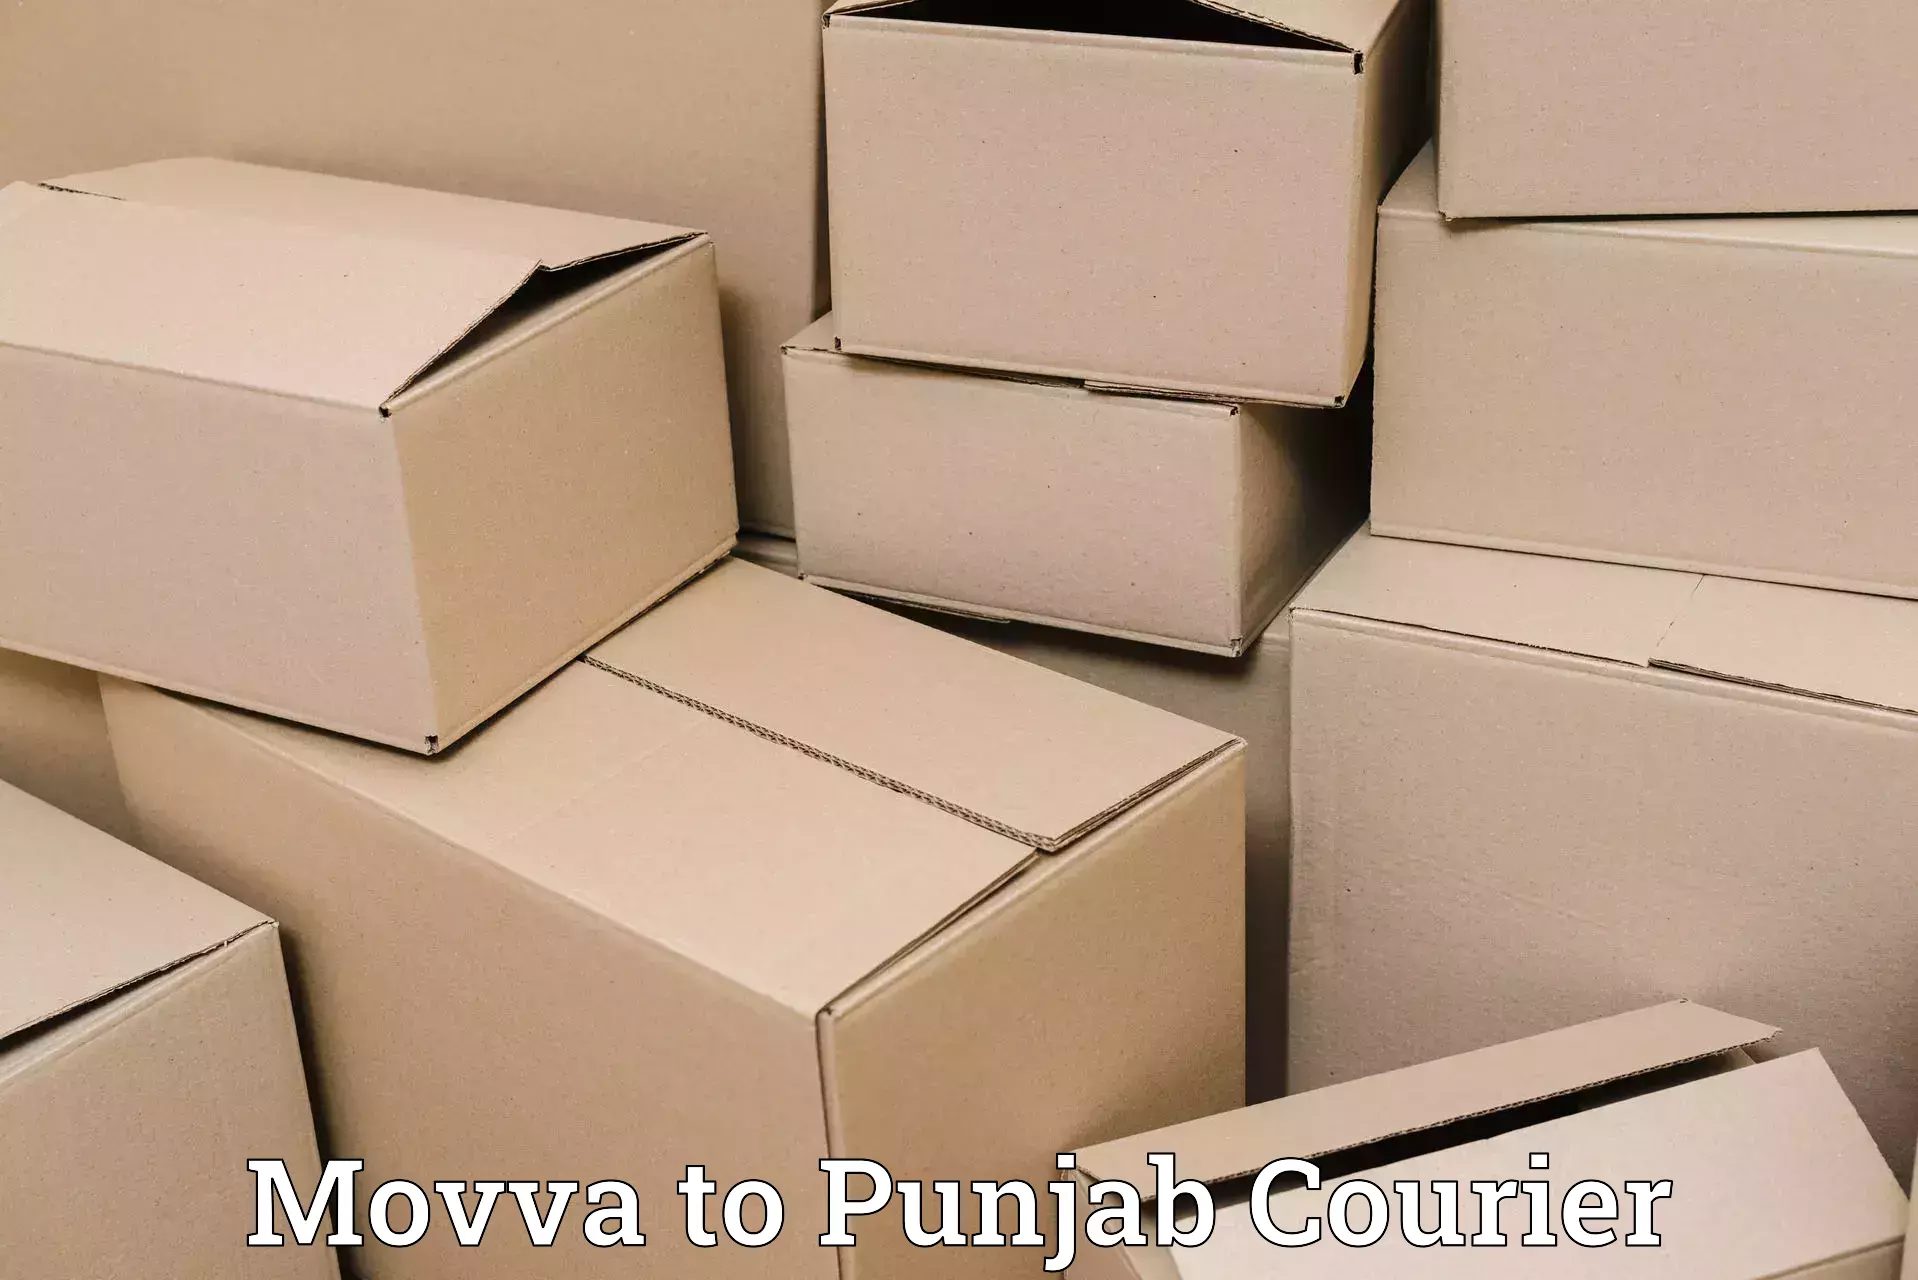 Bulk courier orders Movva to Jalandhar